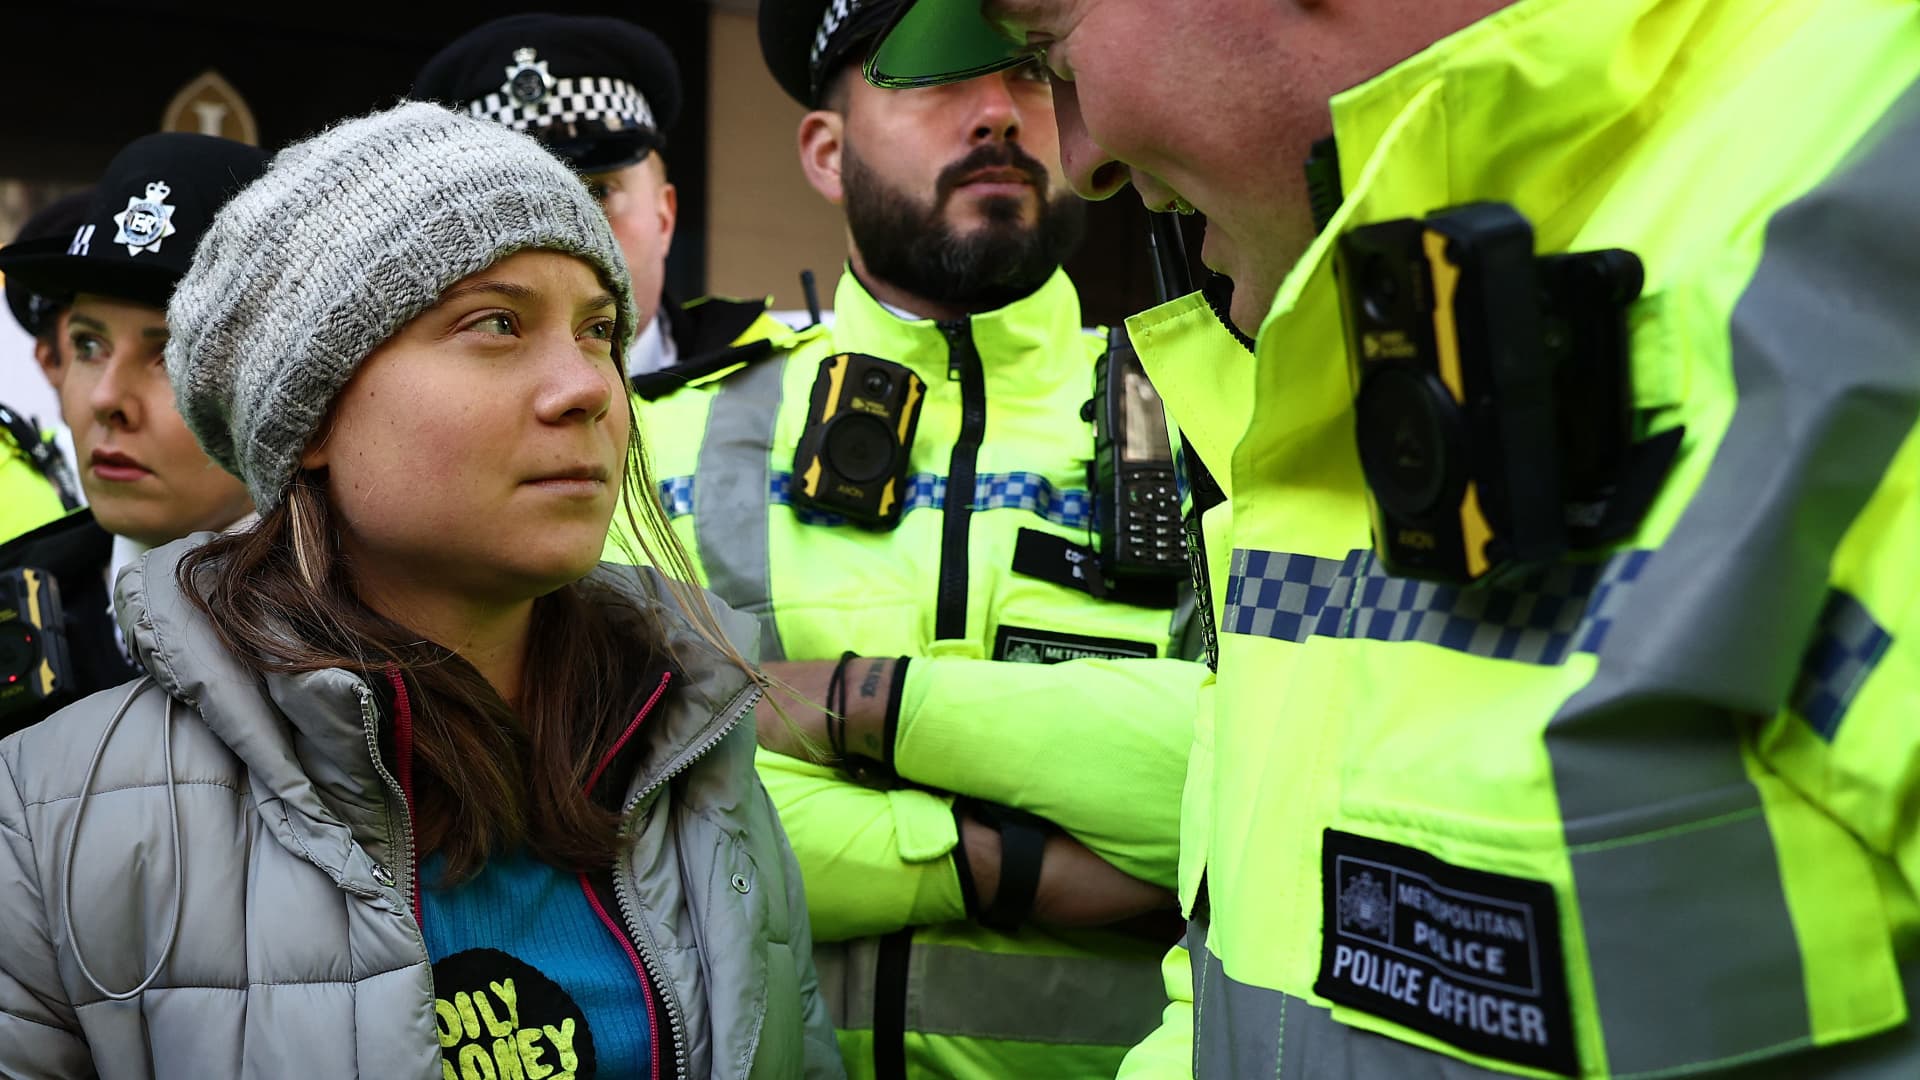 Climate activist Greta Thunberg arrested at London protest after disrupting major oil conference